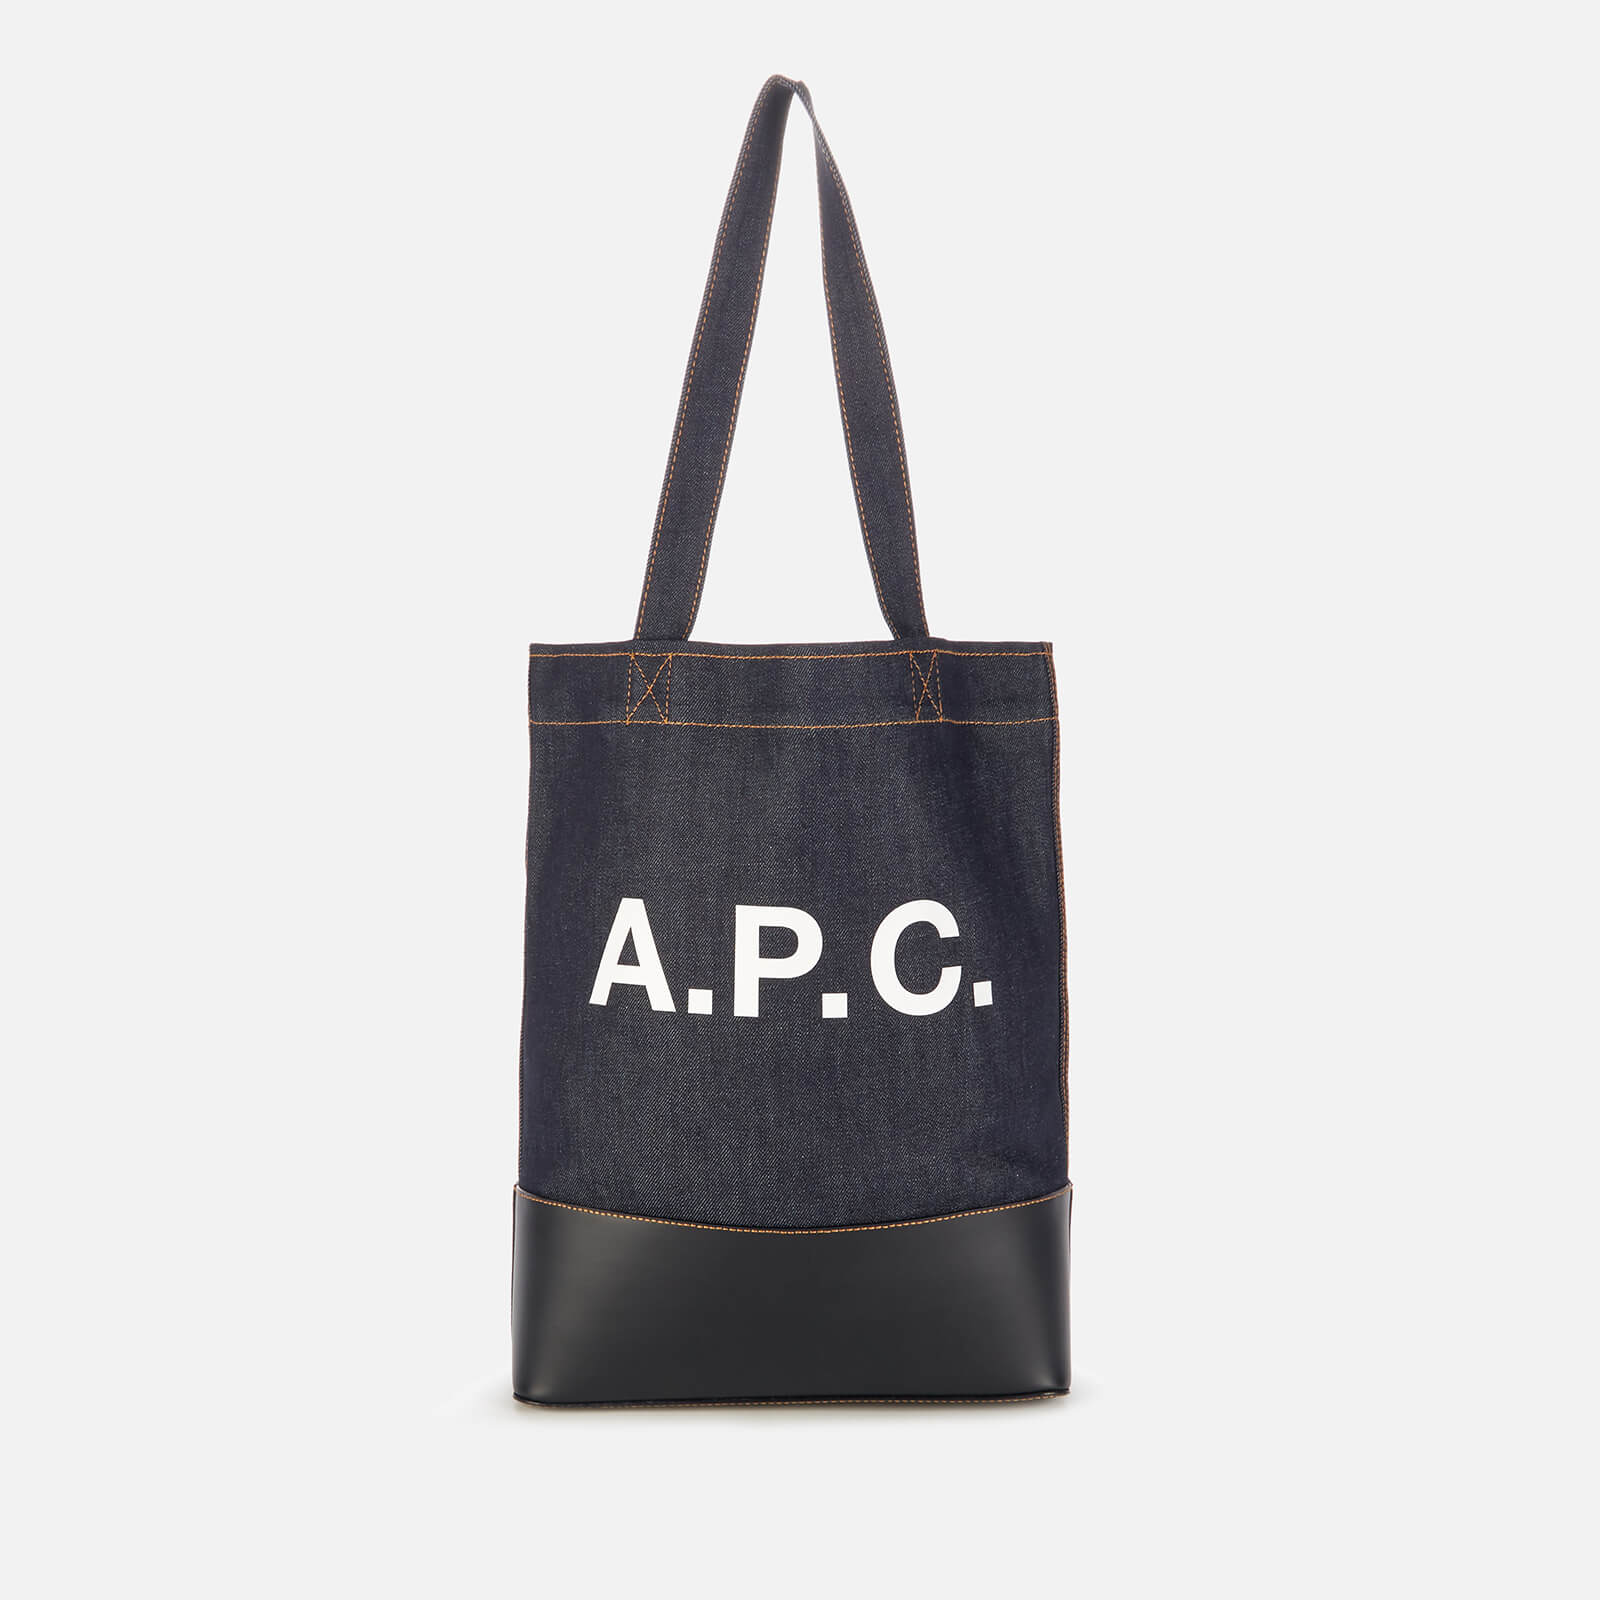 A.P.C. Women's Axel Tote Bag - Dark Navy